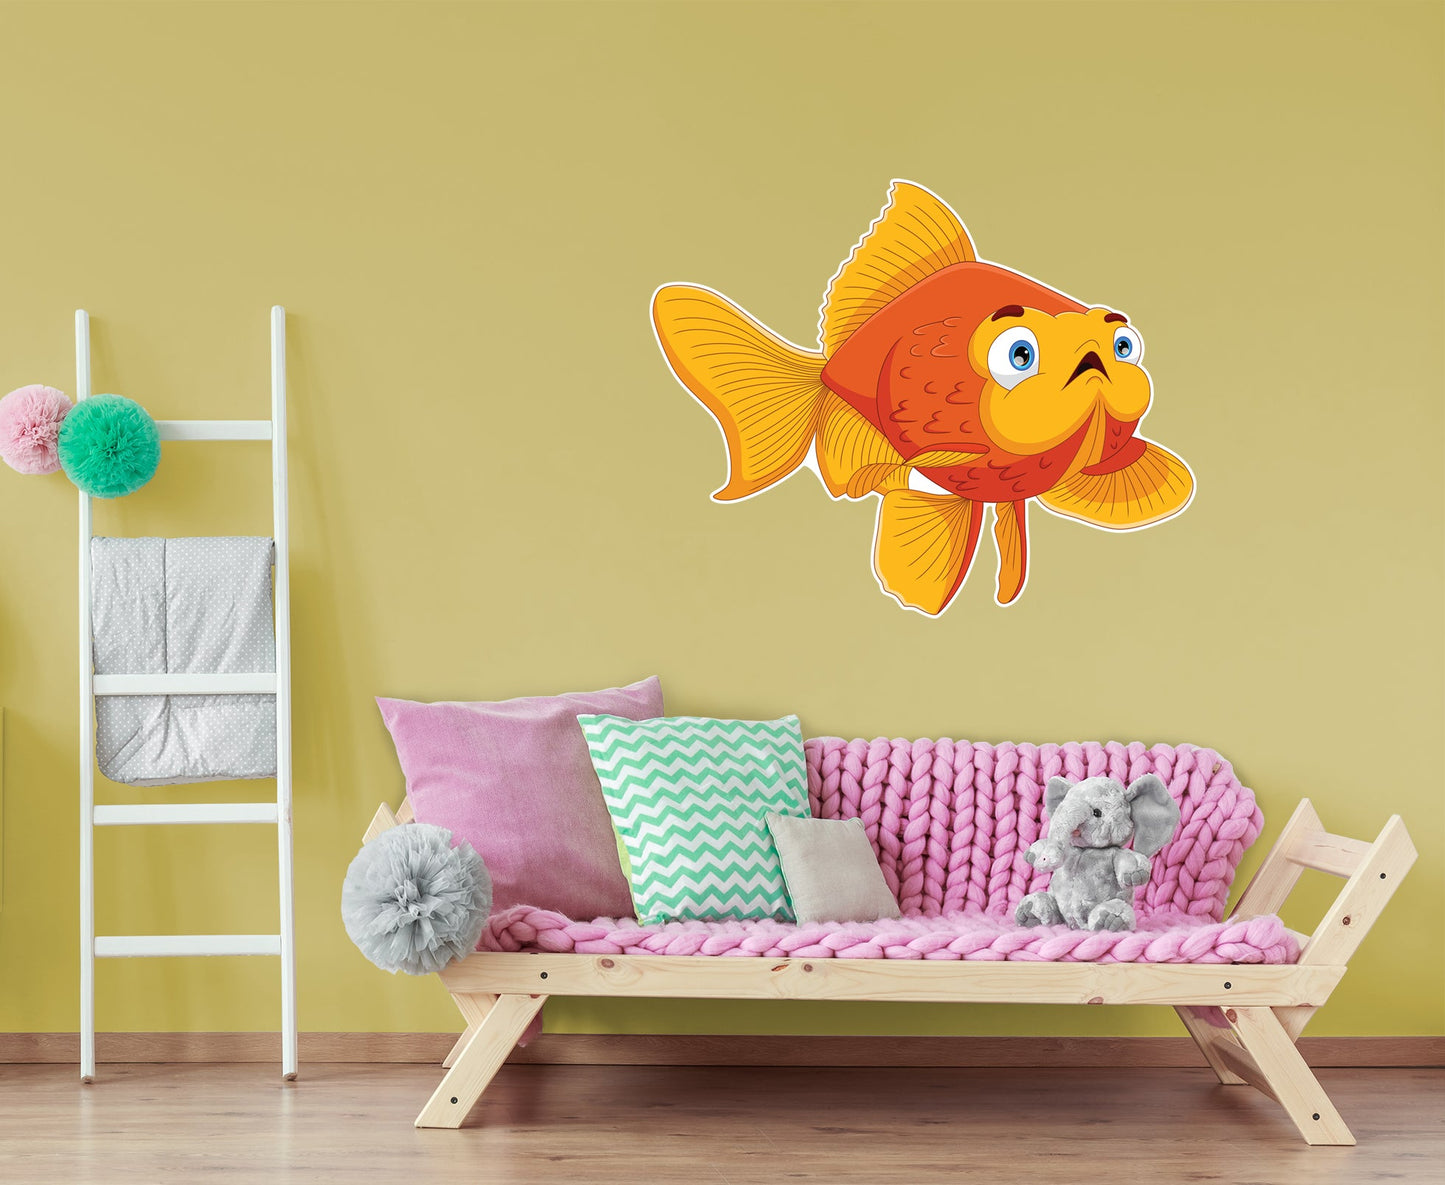 Nursery:  Orange Fish Icon        -   Removable Wall   Adhesive Decal